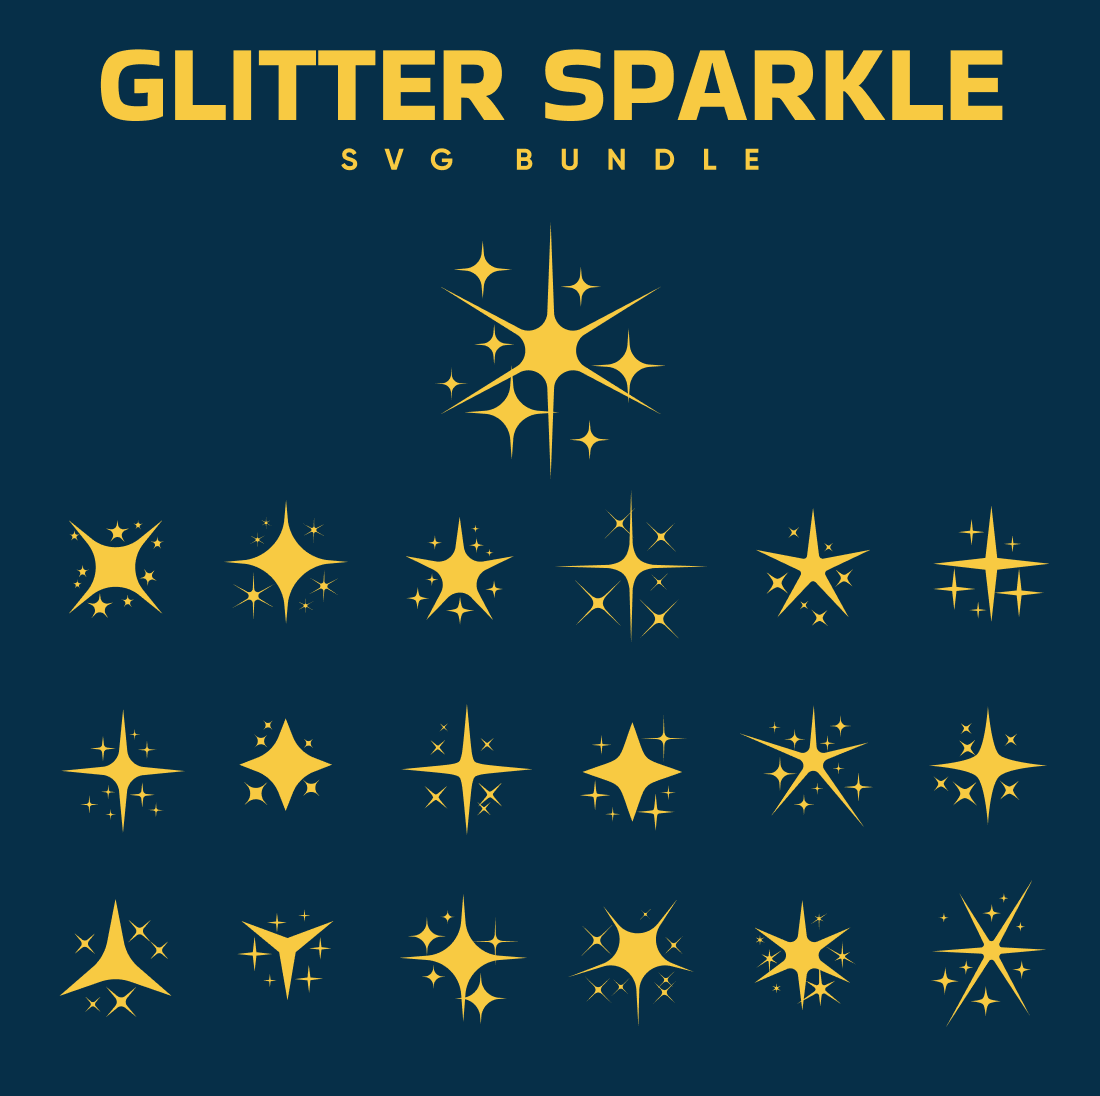 Glitter sparkle svg preview.